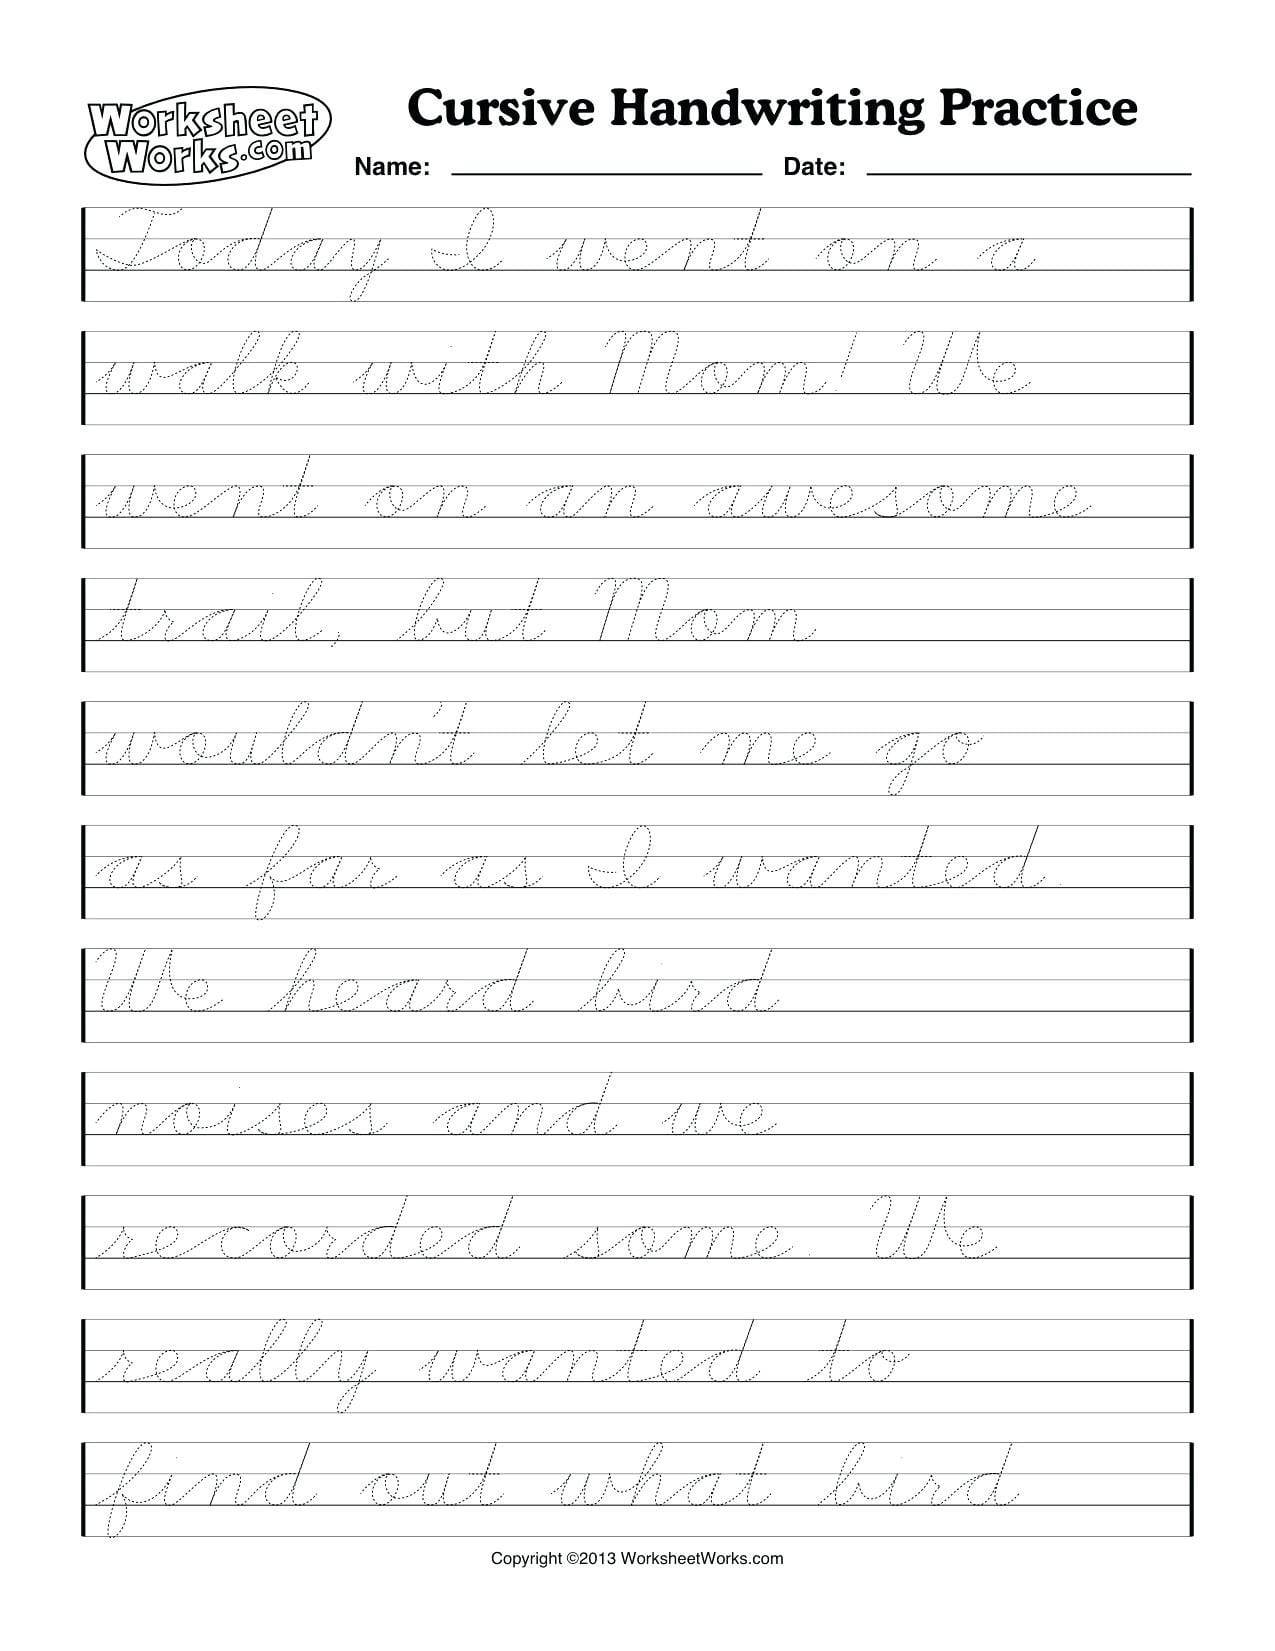 6th grade cursive handwriting worksheets holiday handwriting db excelcom